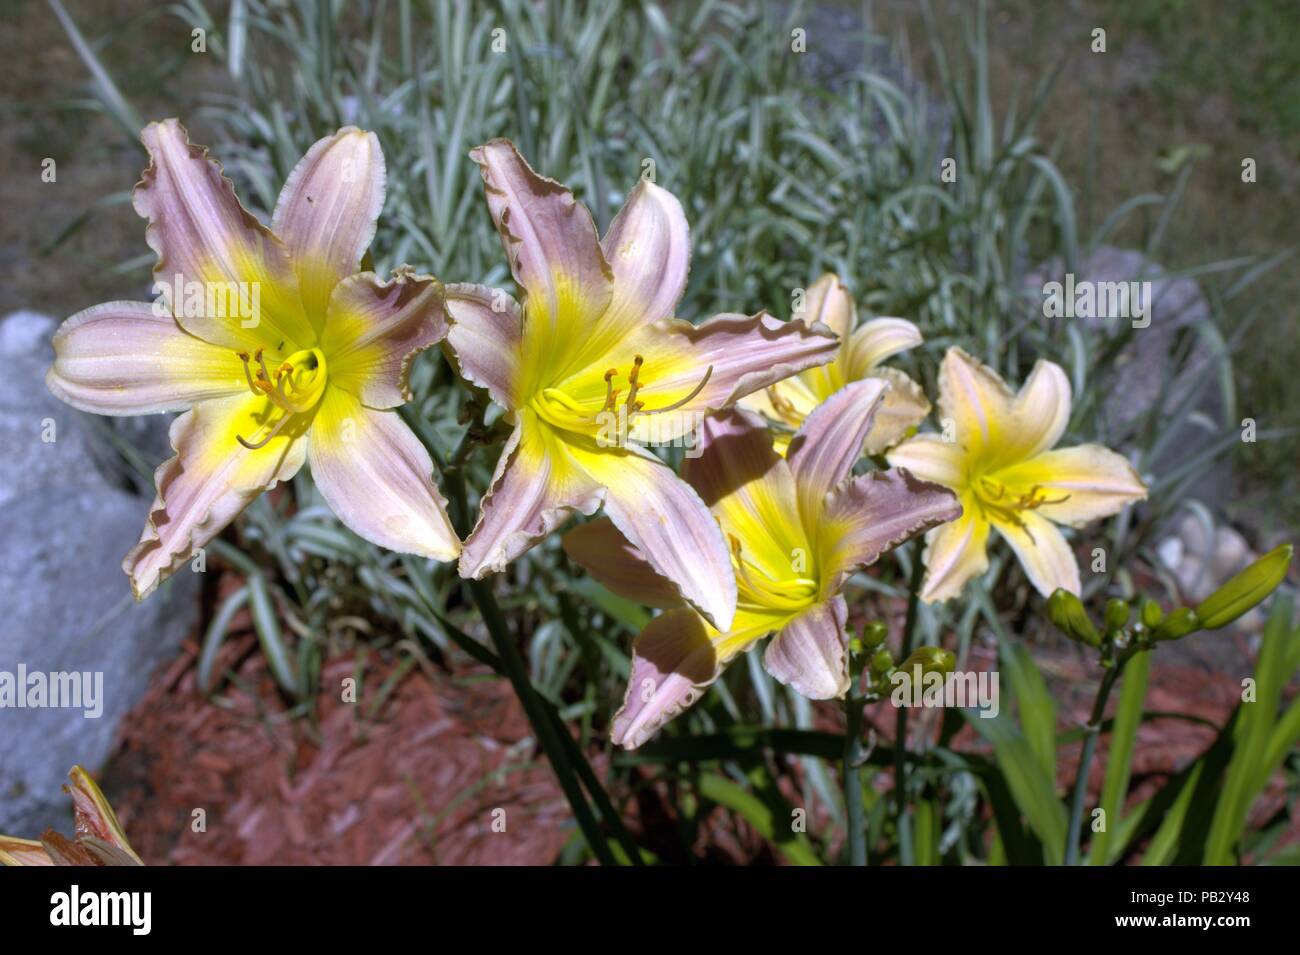 Rosa e giallo Daylilies Blooming Foto Stock